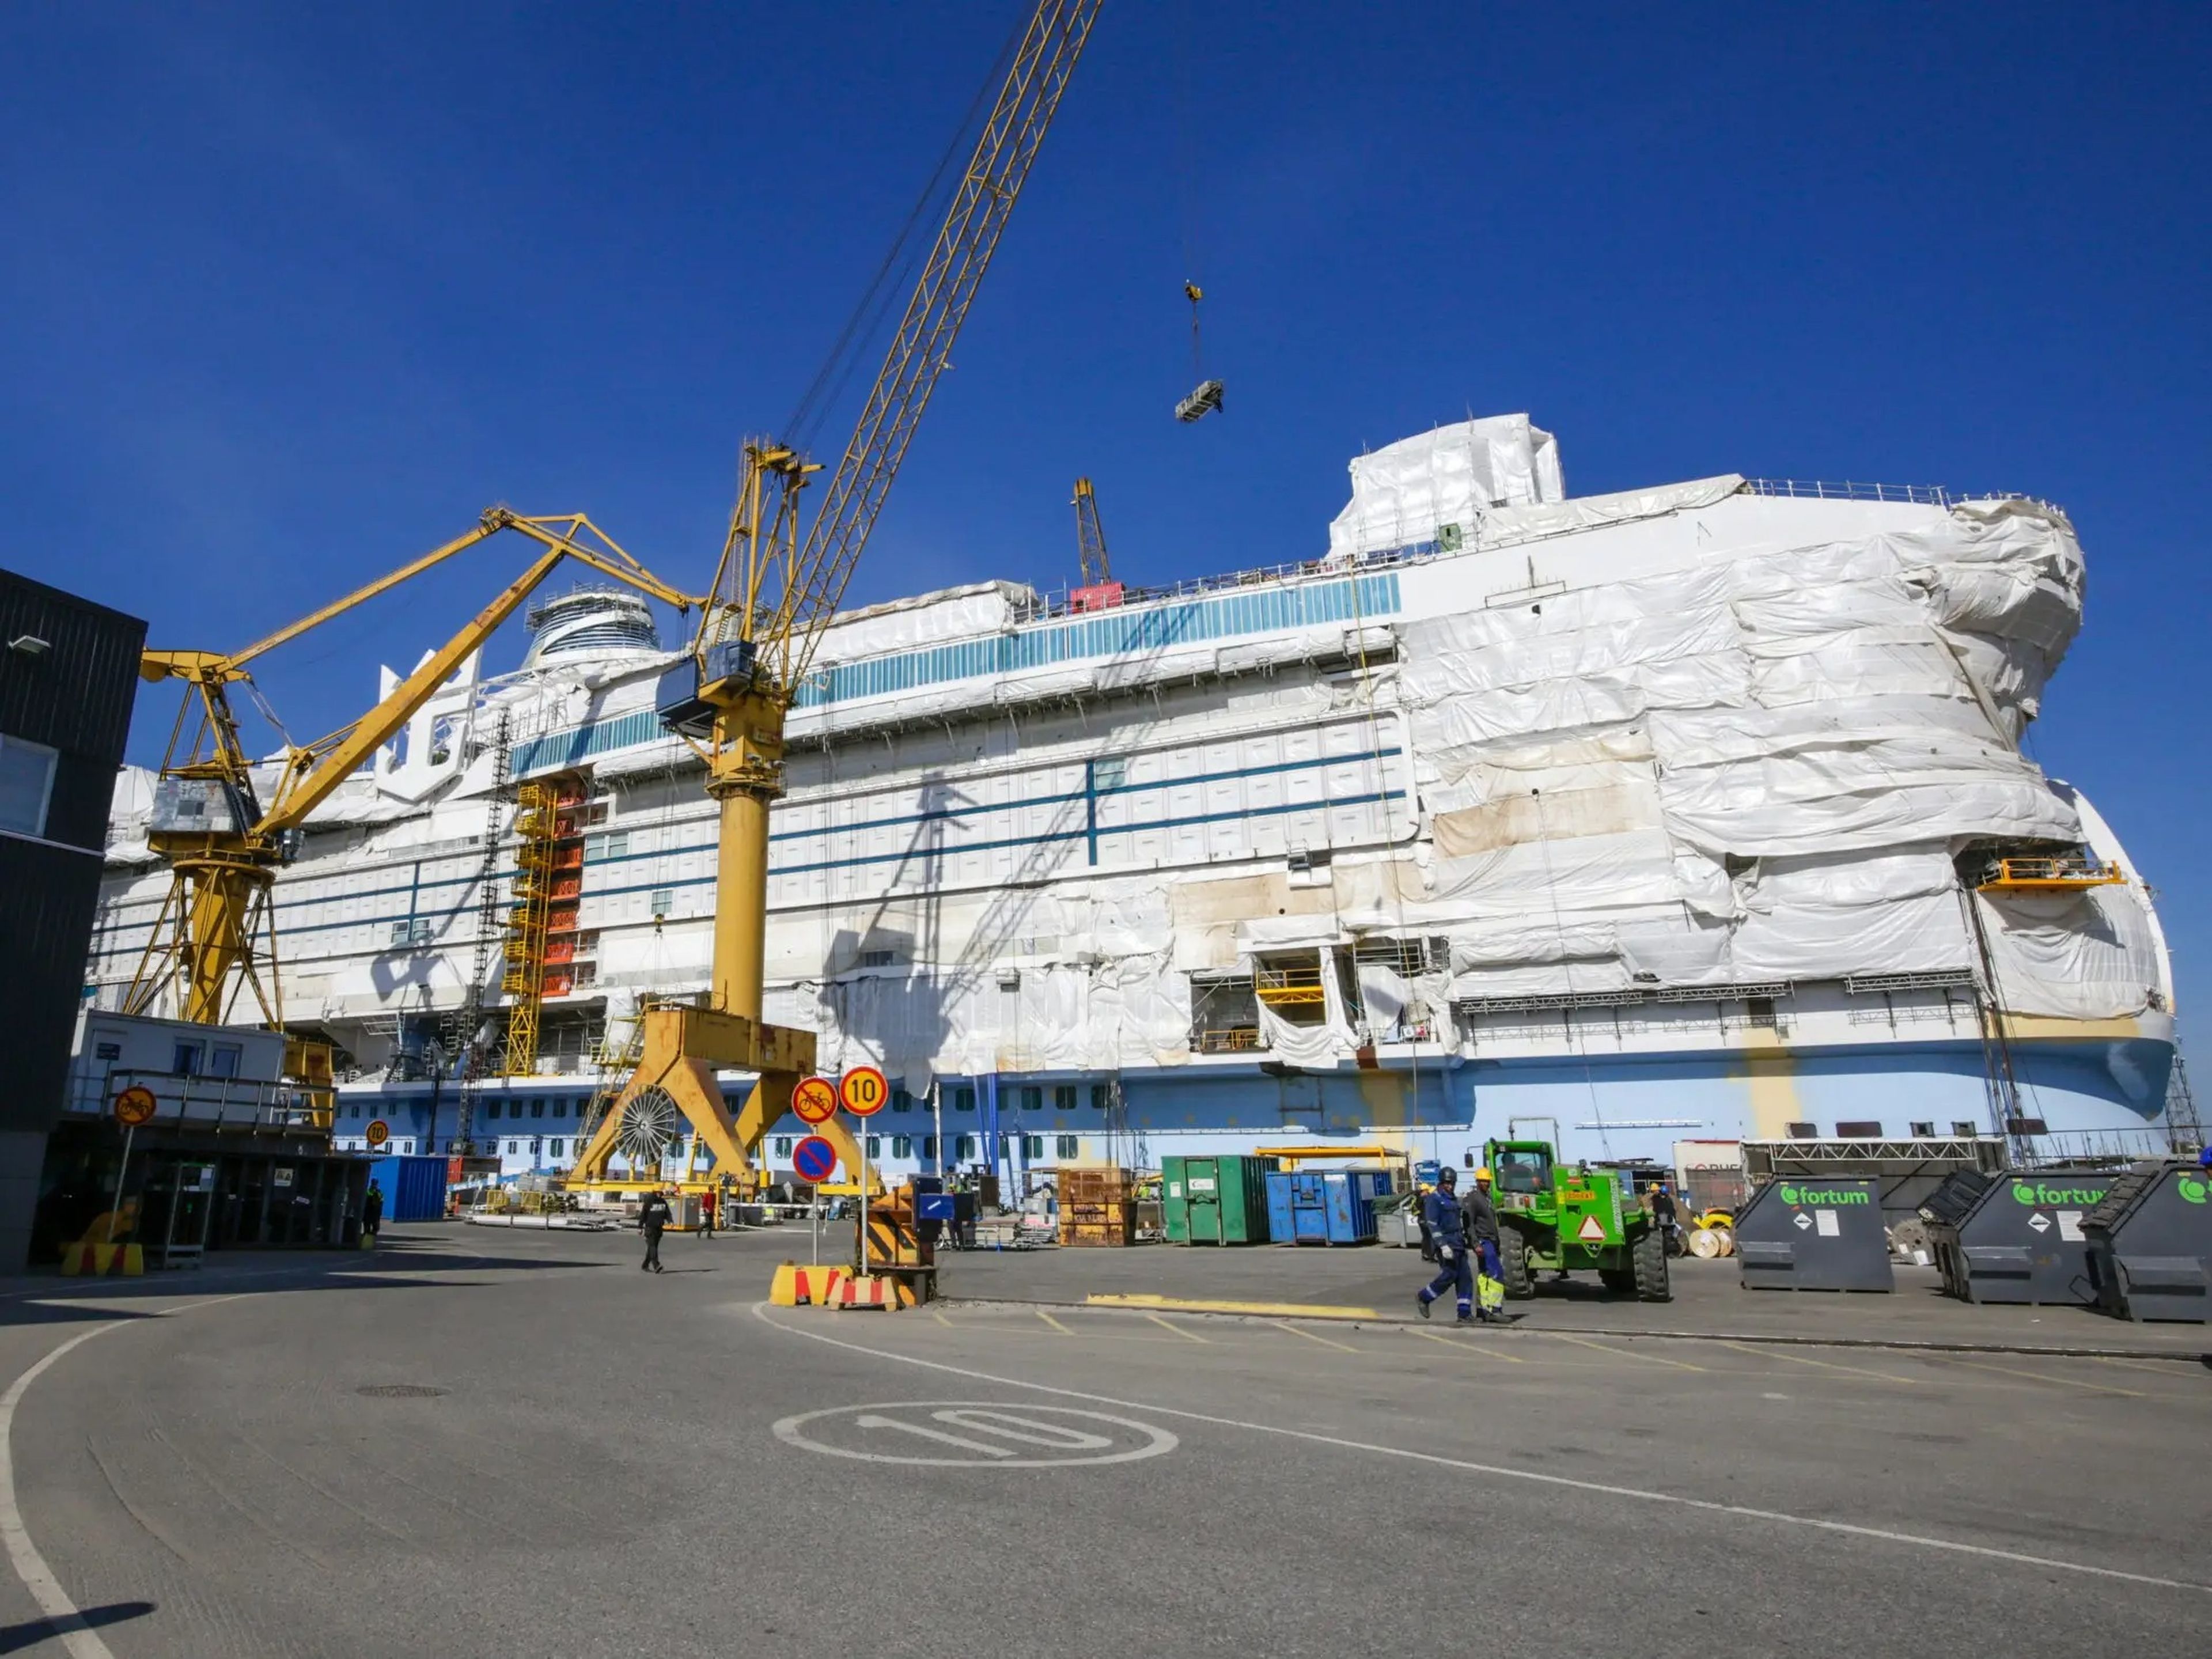 Royal Caribbean's Icon of the Seas cruise ship under construction